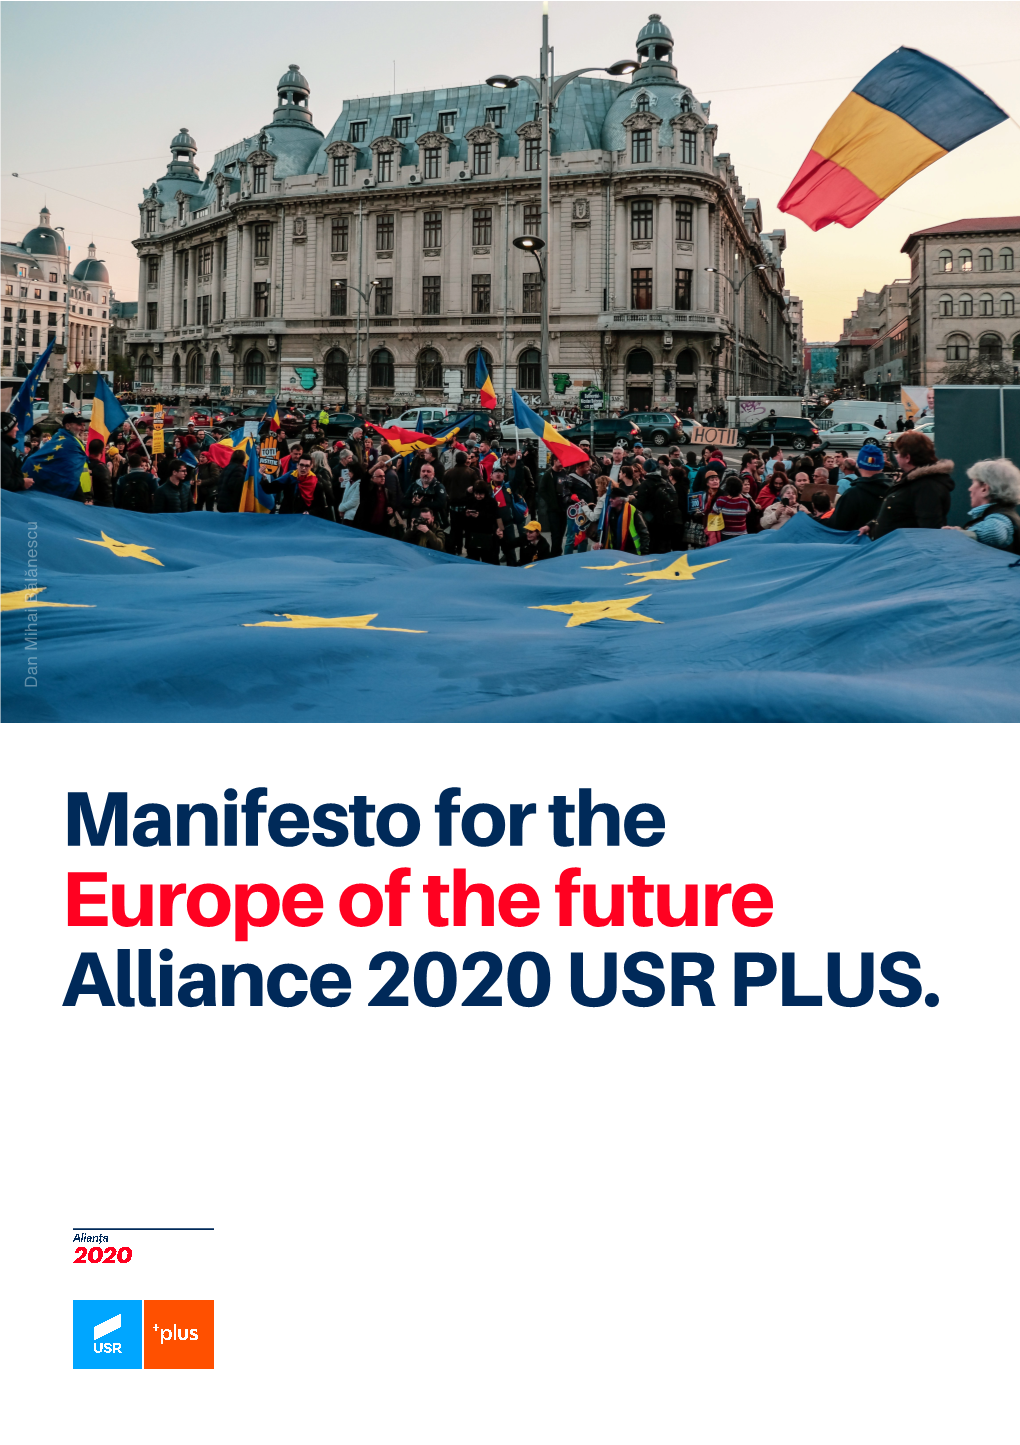 The Alliance 2020 USR PLUS Manifesto for the Europe of the Future